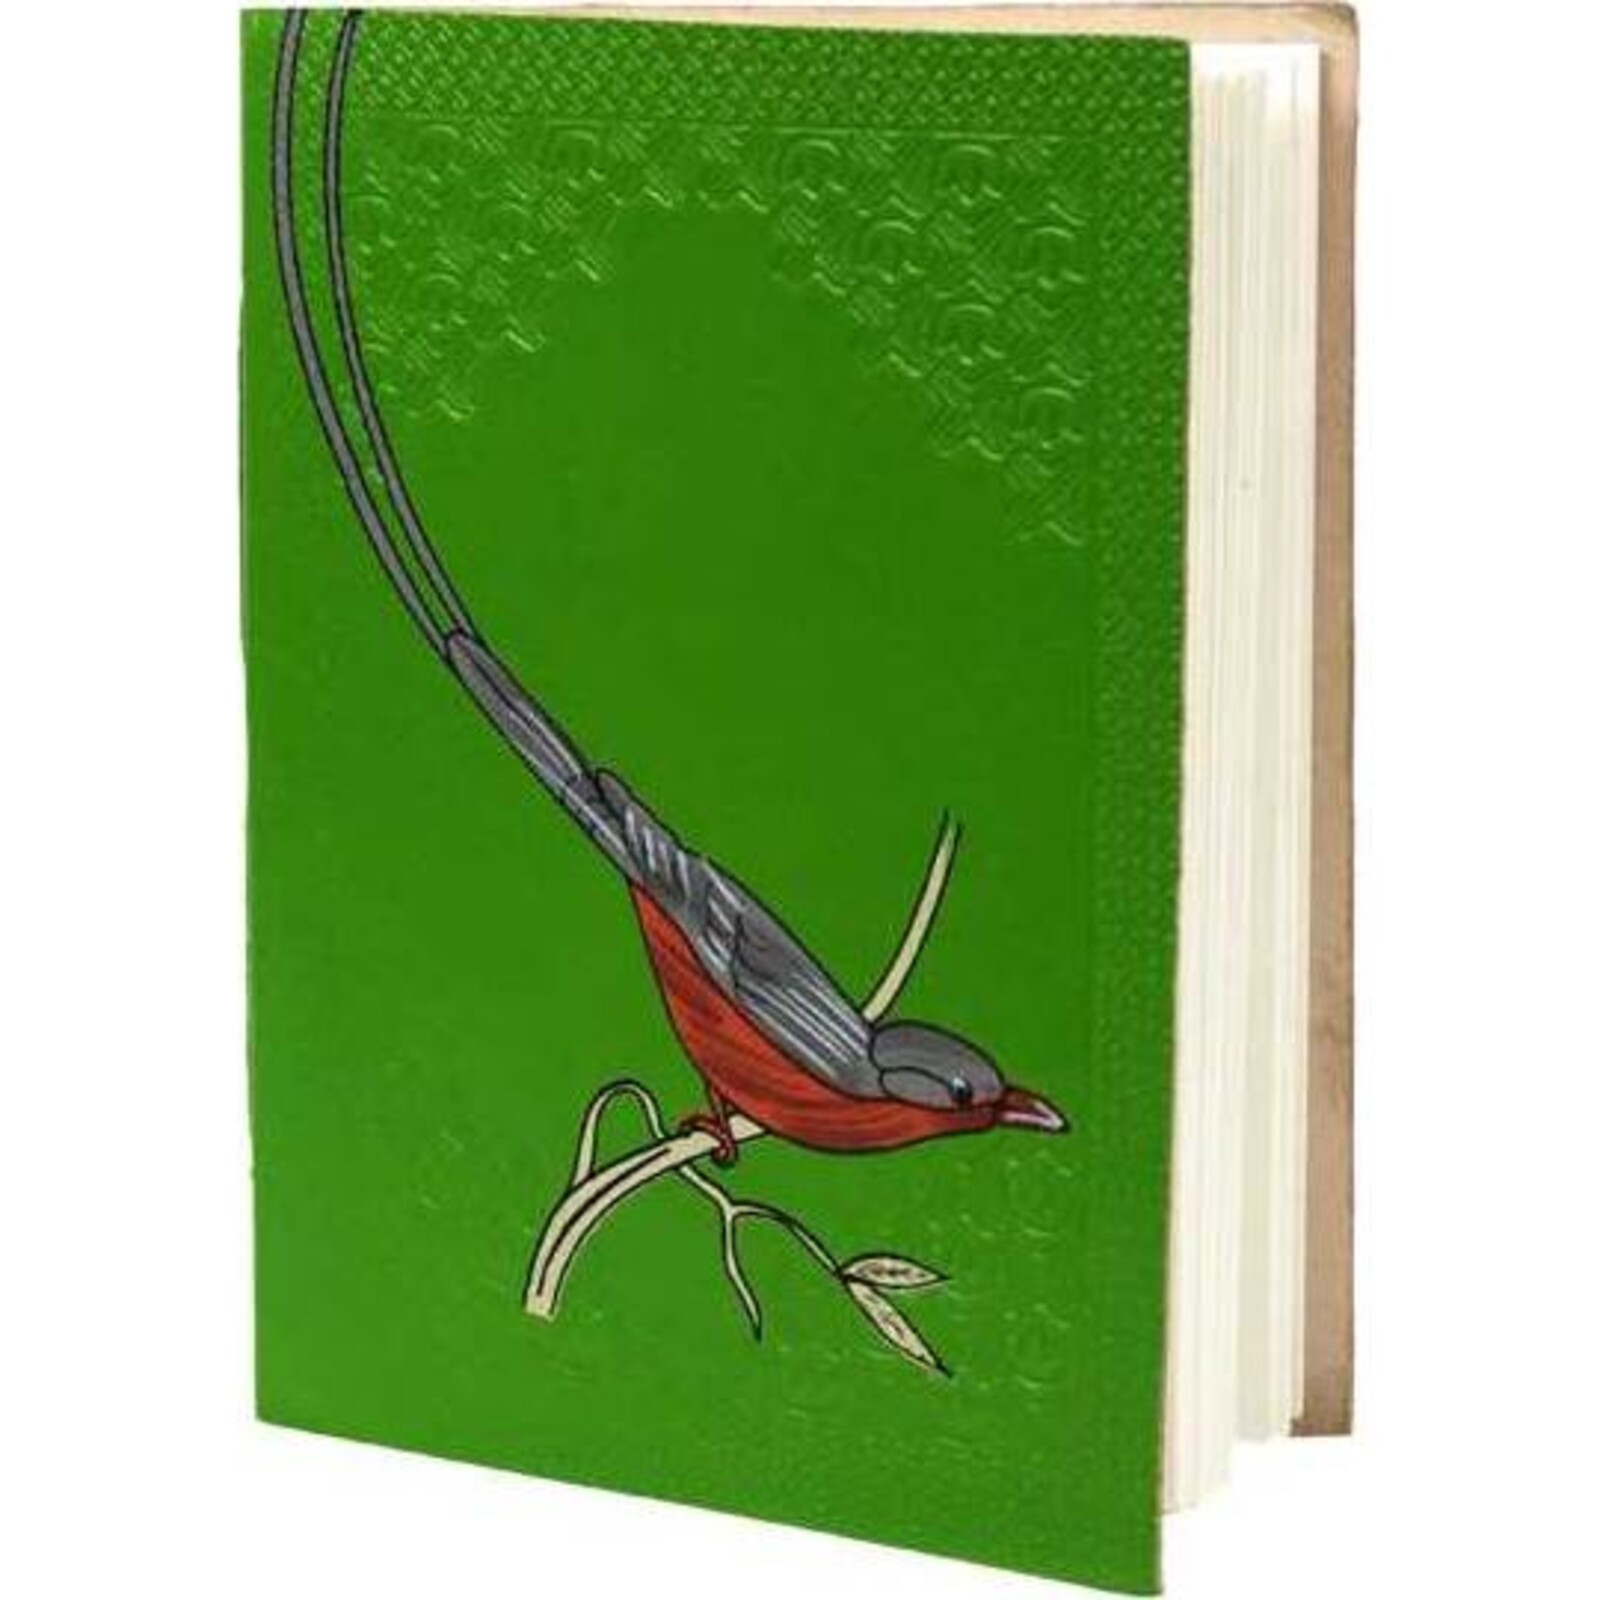 Leather Notebook - Bird on Green